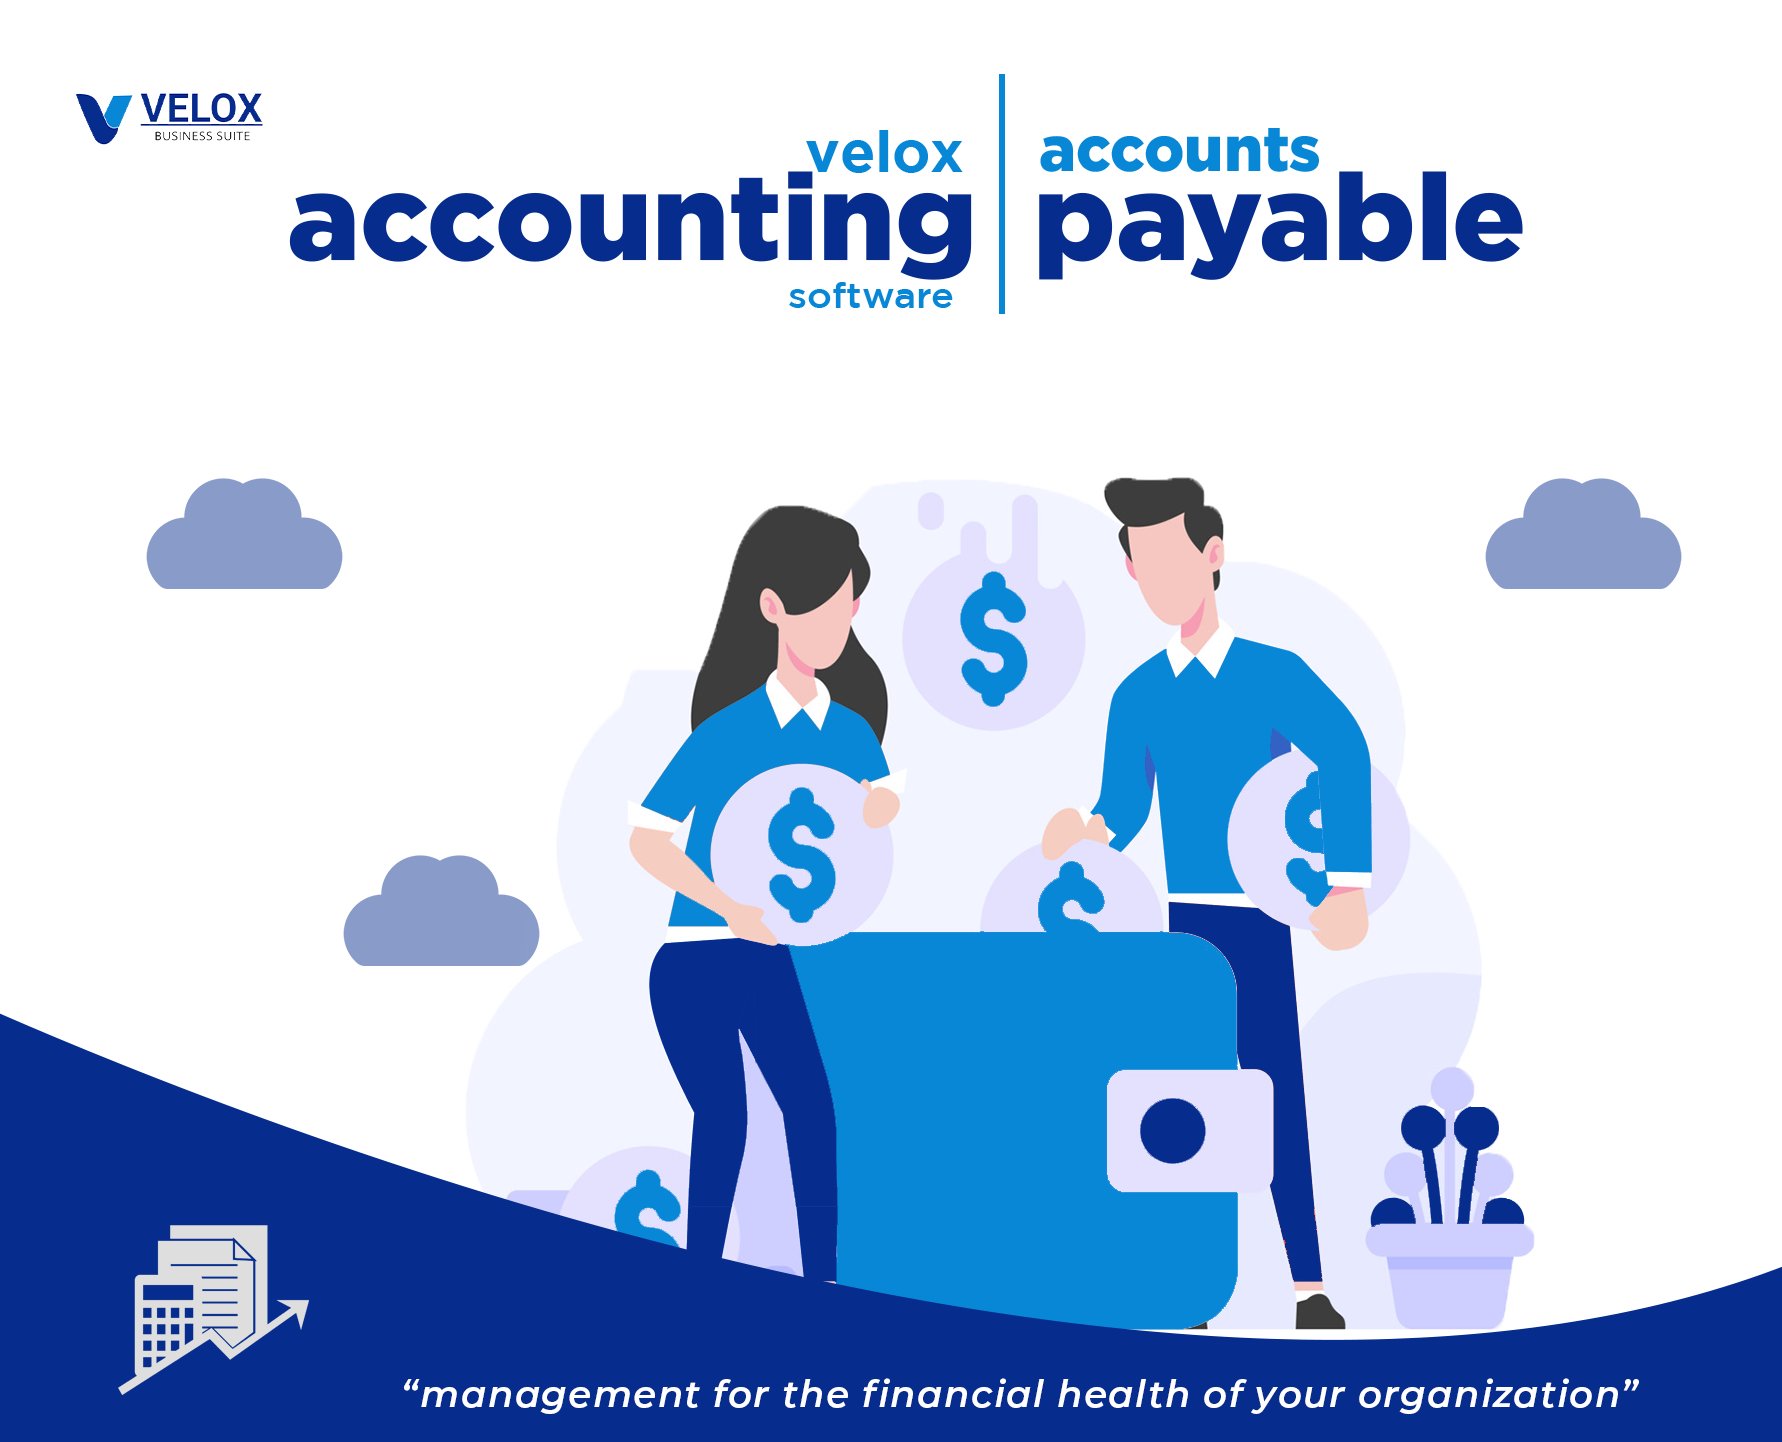 Accounts Payable (AP)